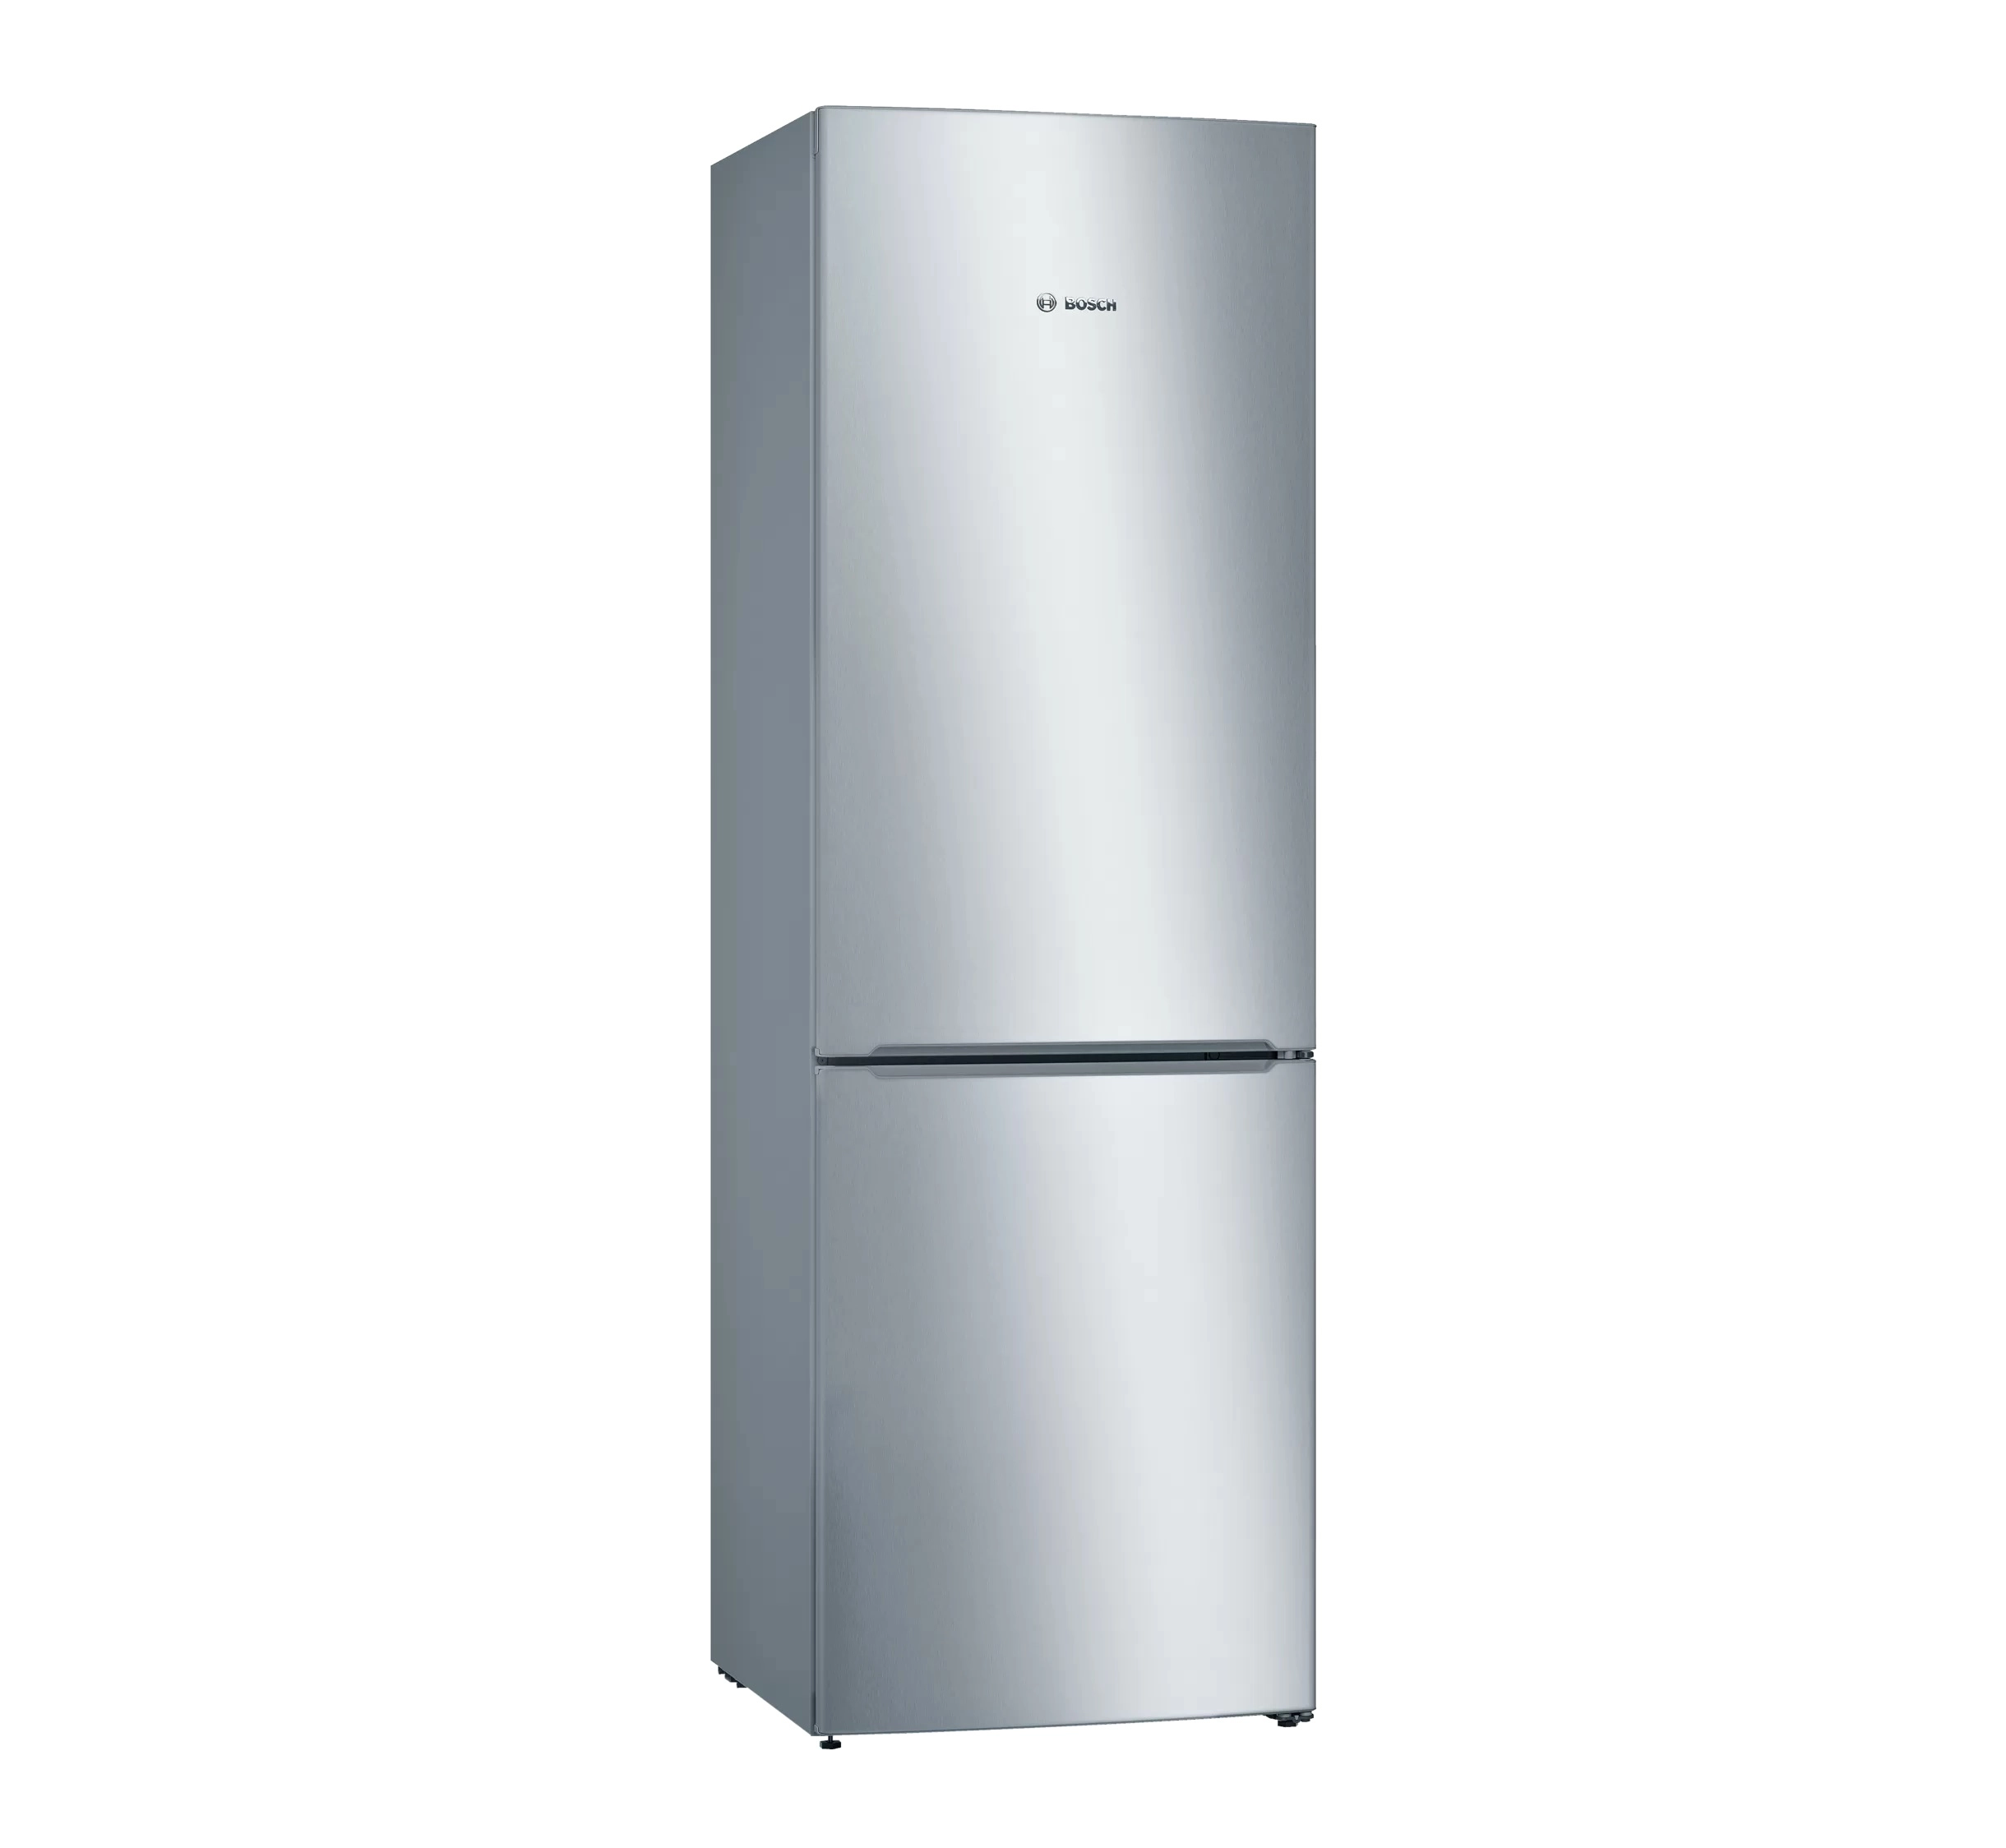 Купить холодильник в воронеже недорого. Холодильник Bosch kgn36nl21r. Холодильник Bosch kgv39xl22r. Холодильник Bosch kgn39. Двухкамерный холодильник Bosch KGV 39 XL 22 R.